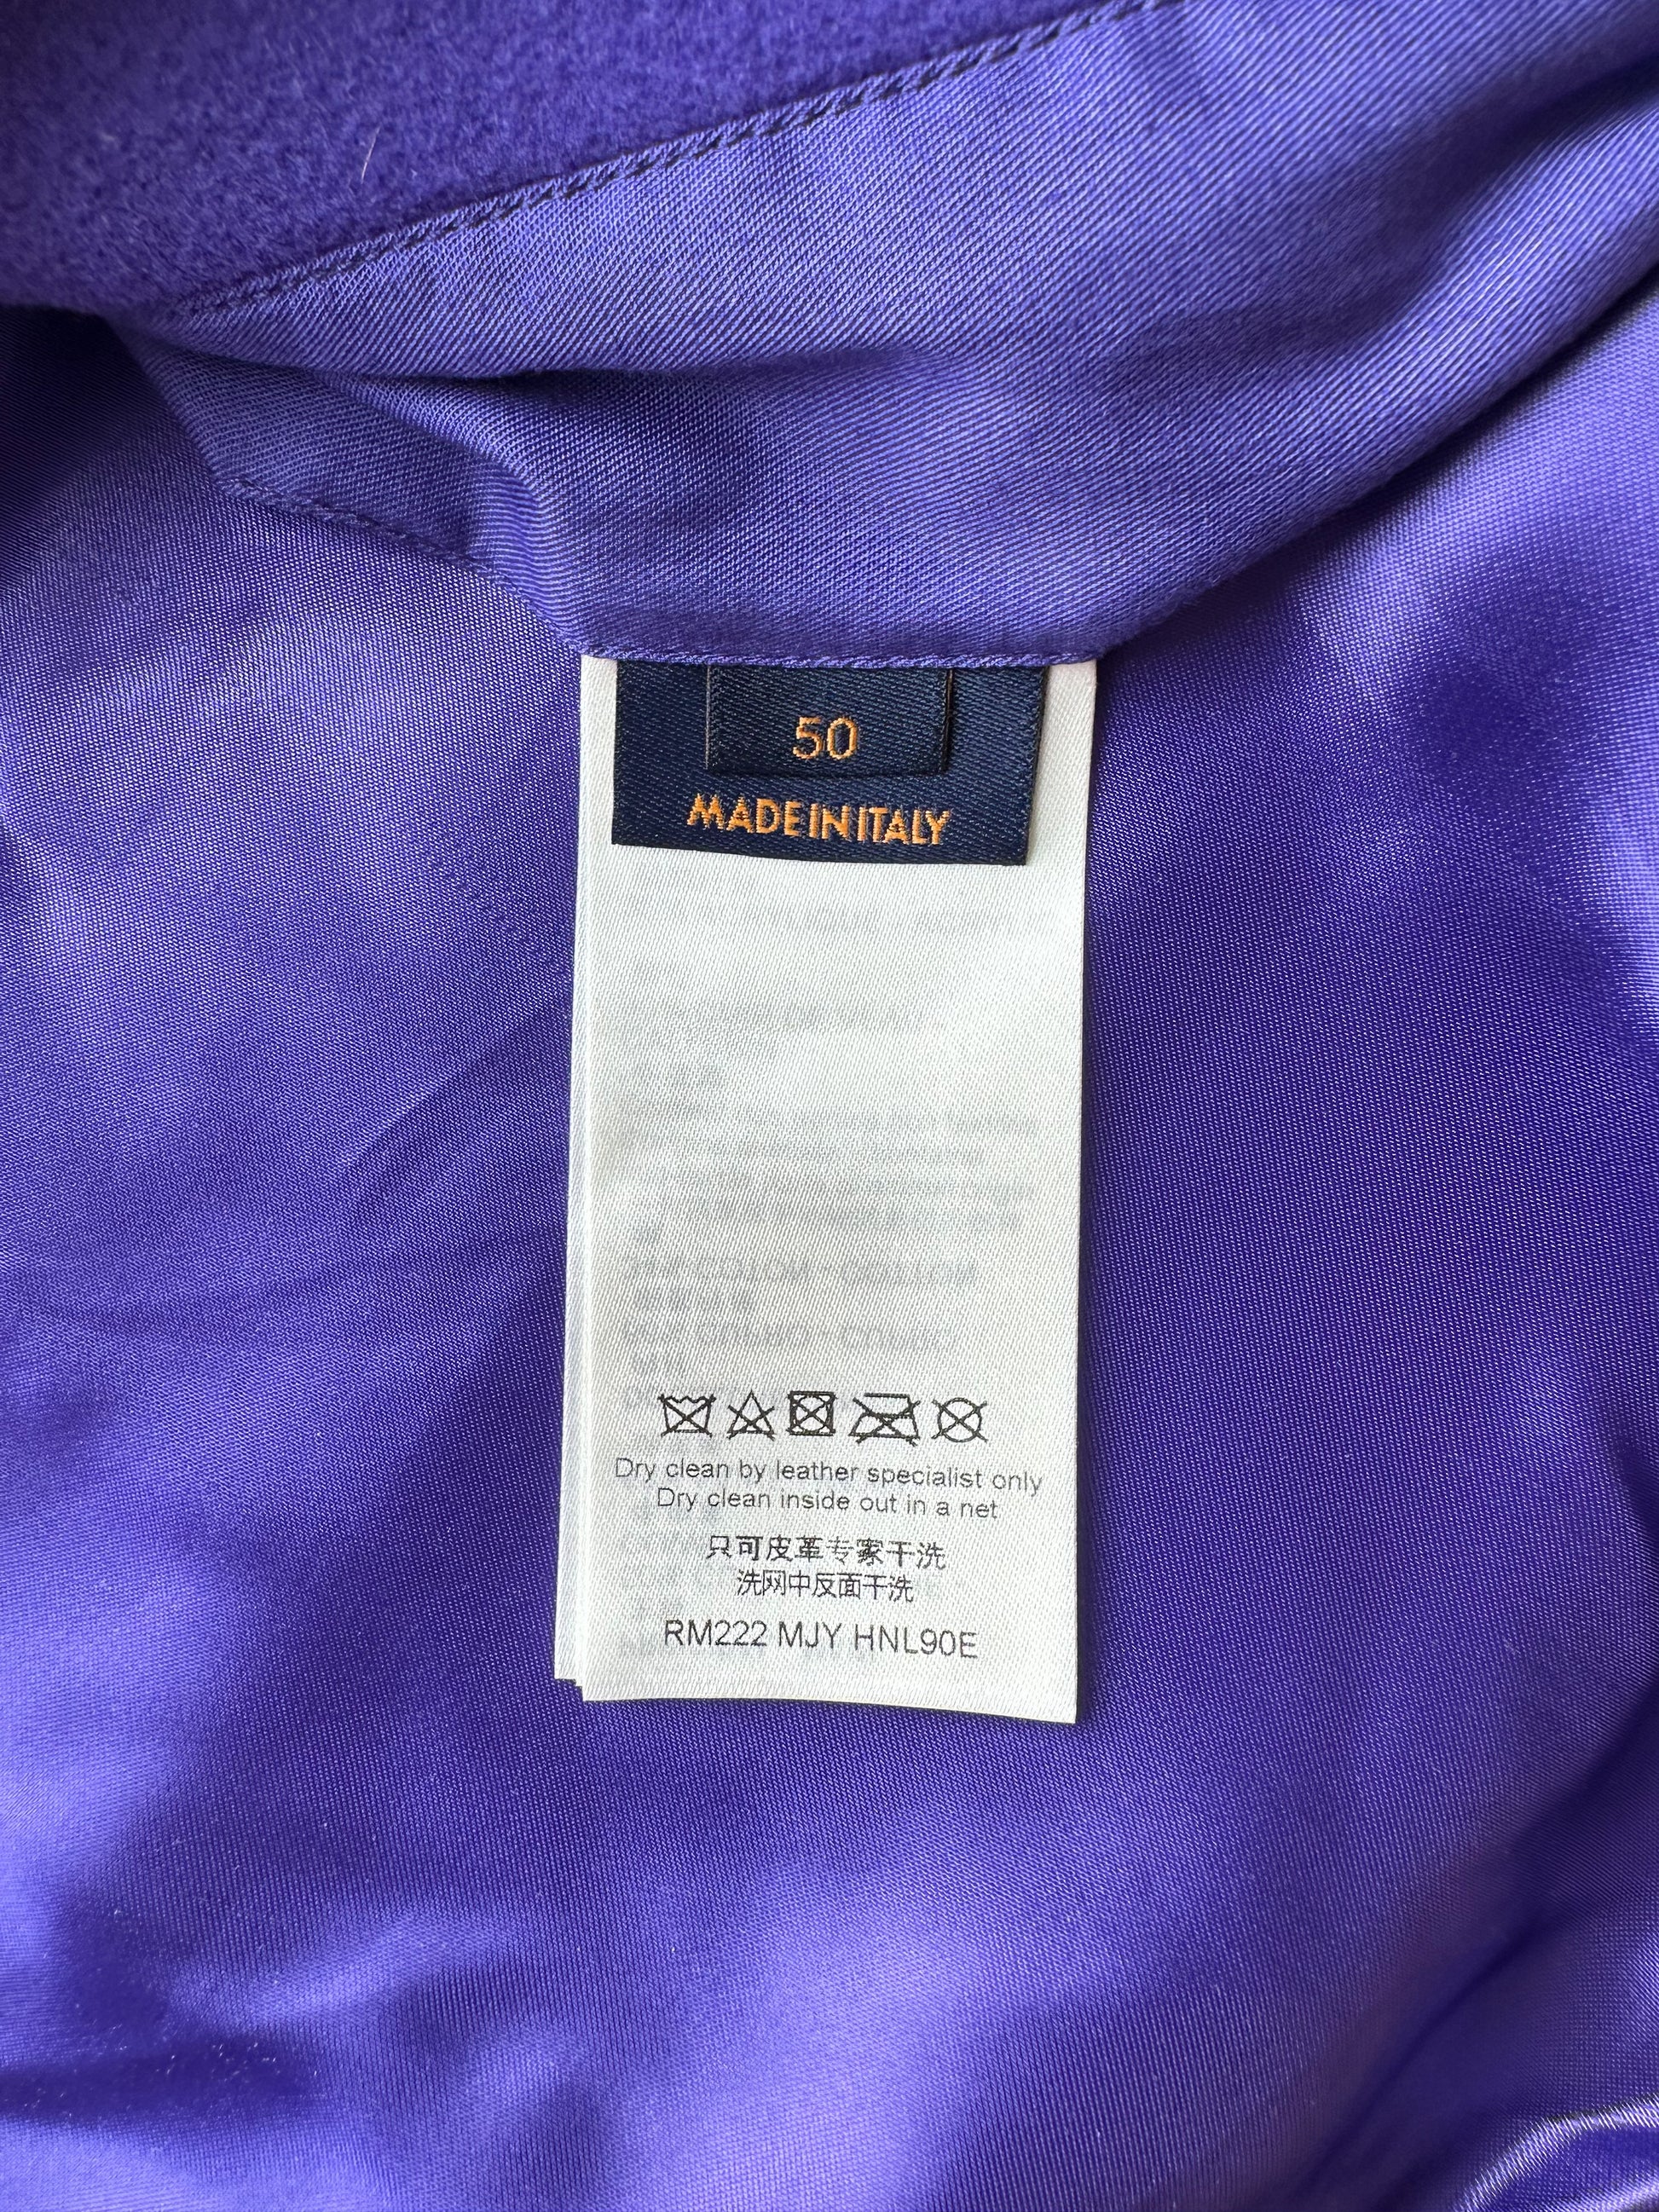 Louis Vuitton Purple & White Frog Varsity Jacket